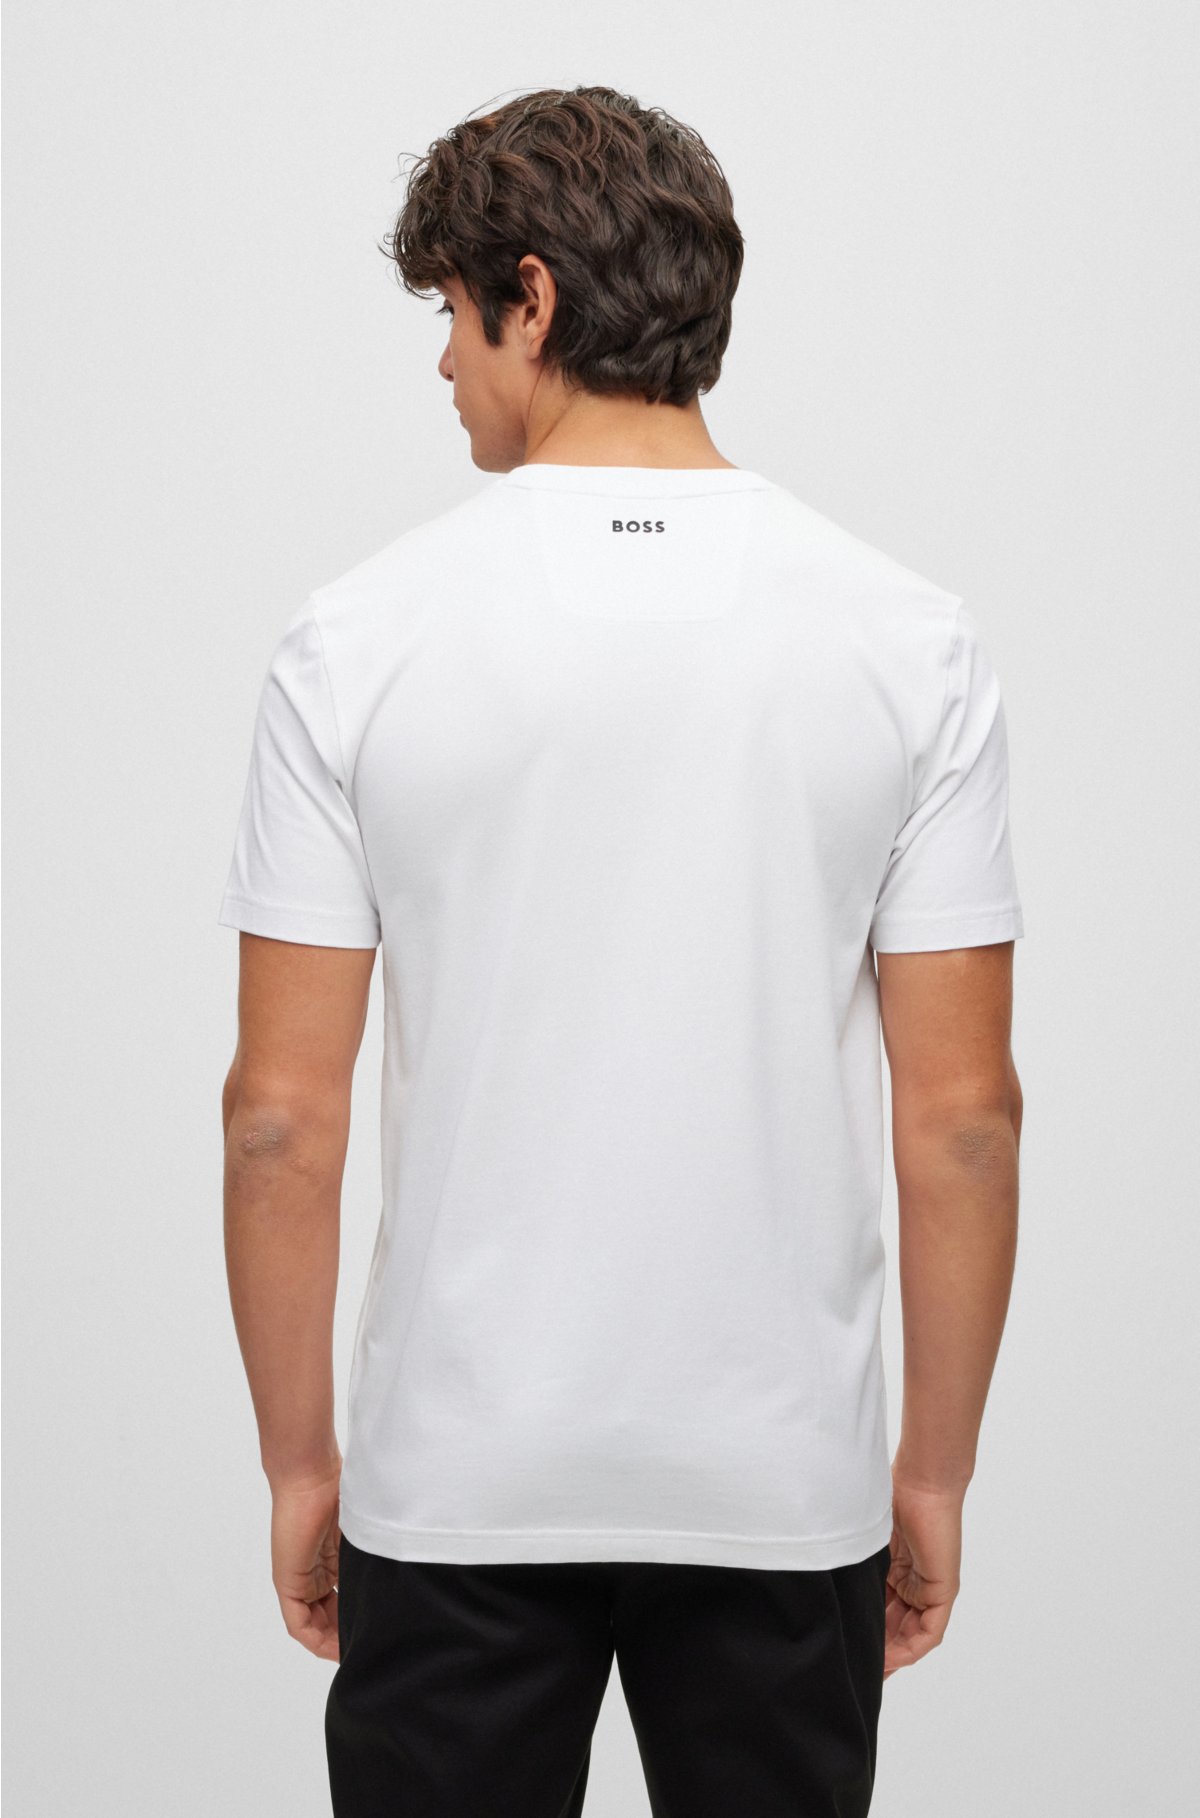 BOSS - Stretch-cotton with T-shirt prints circle logo